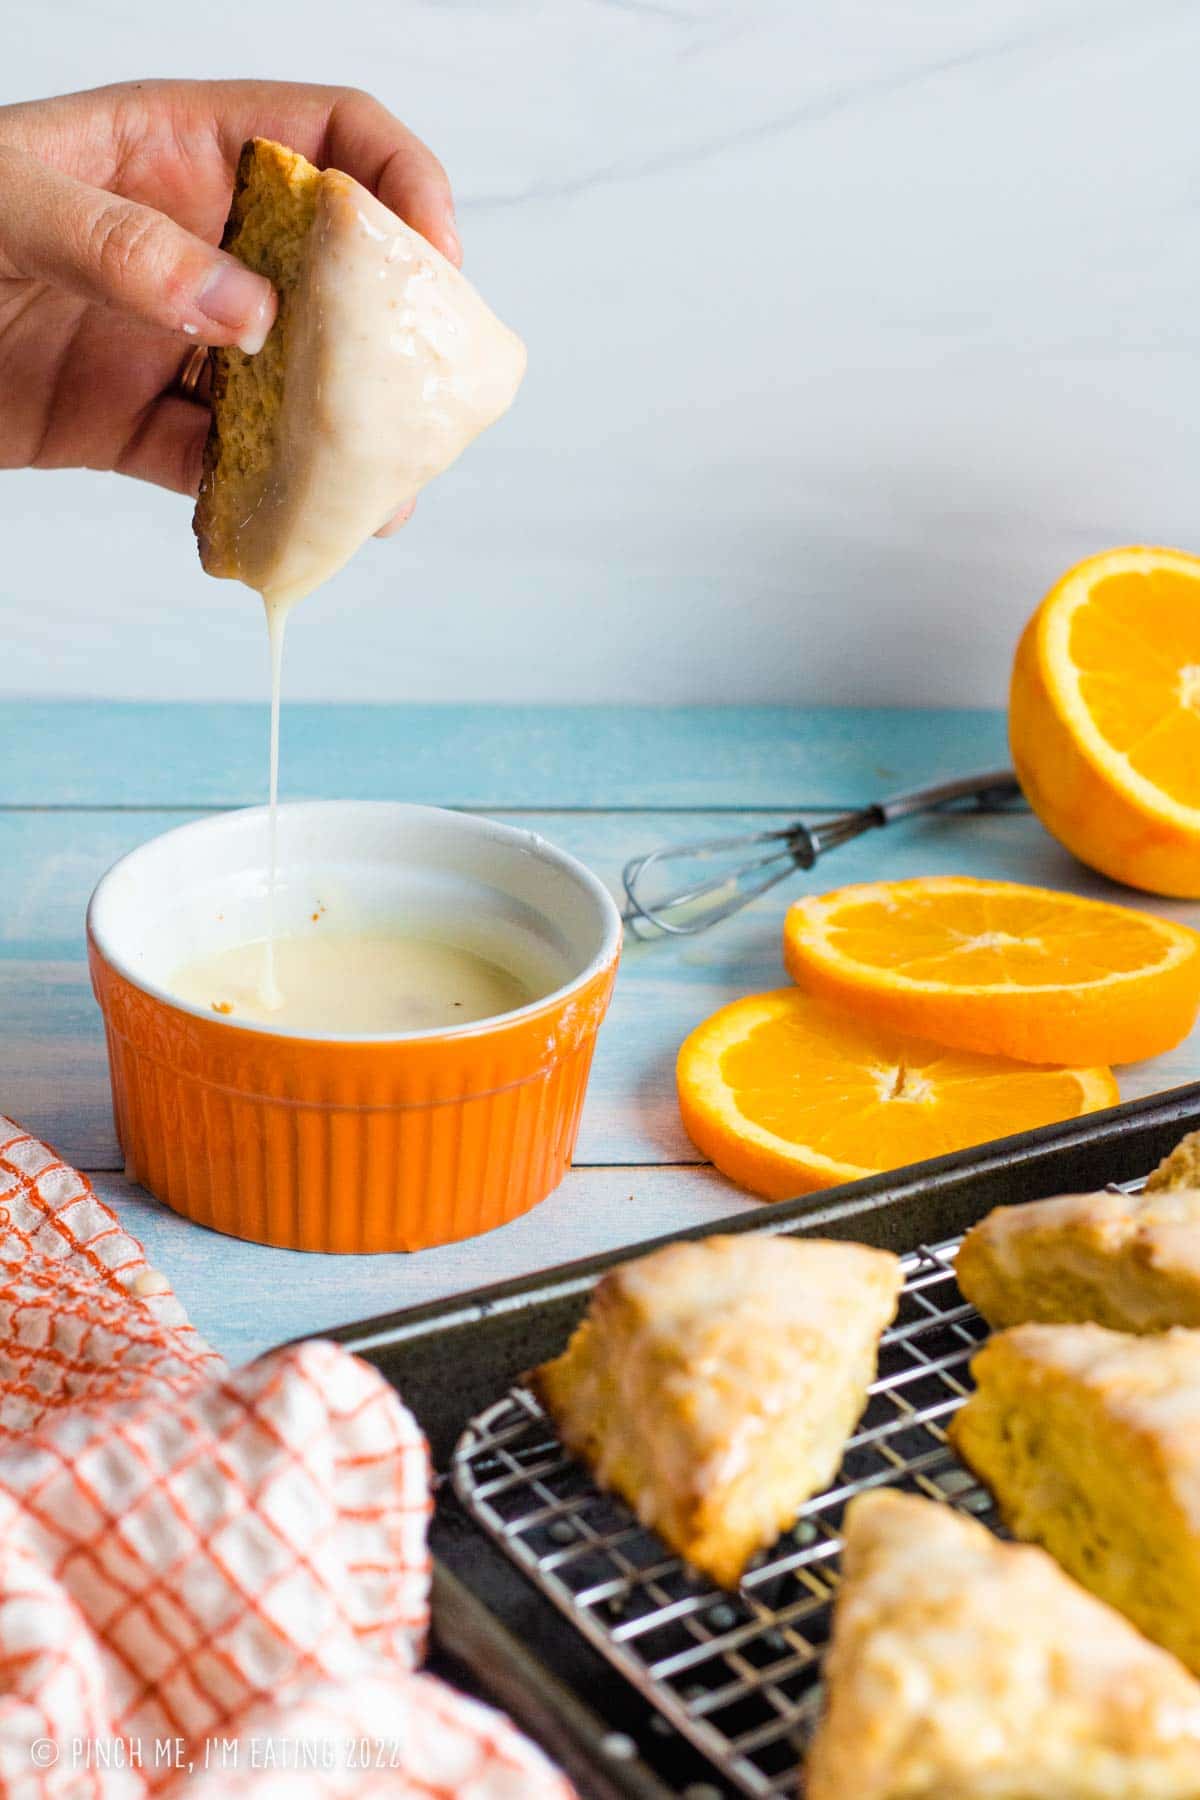 Hand holding freshly glazed homemade orange scone dripping into orange ramekin.